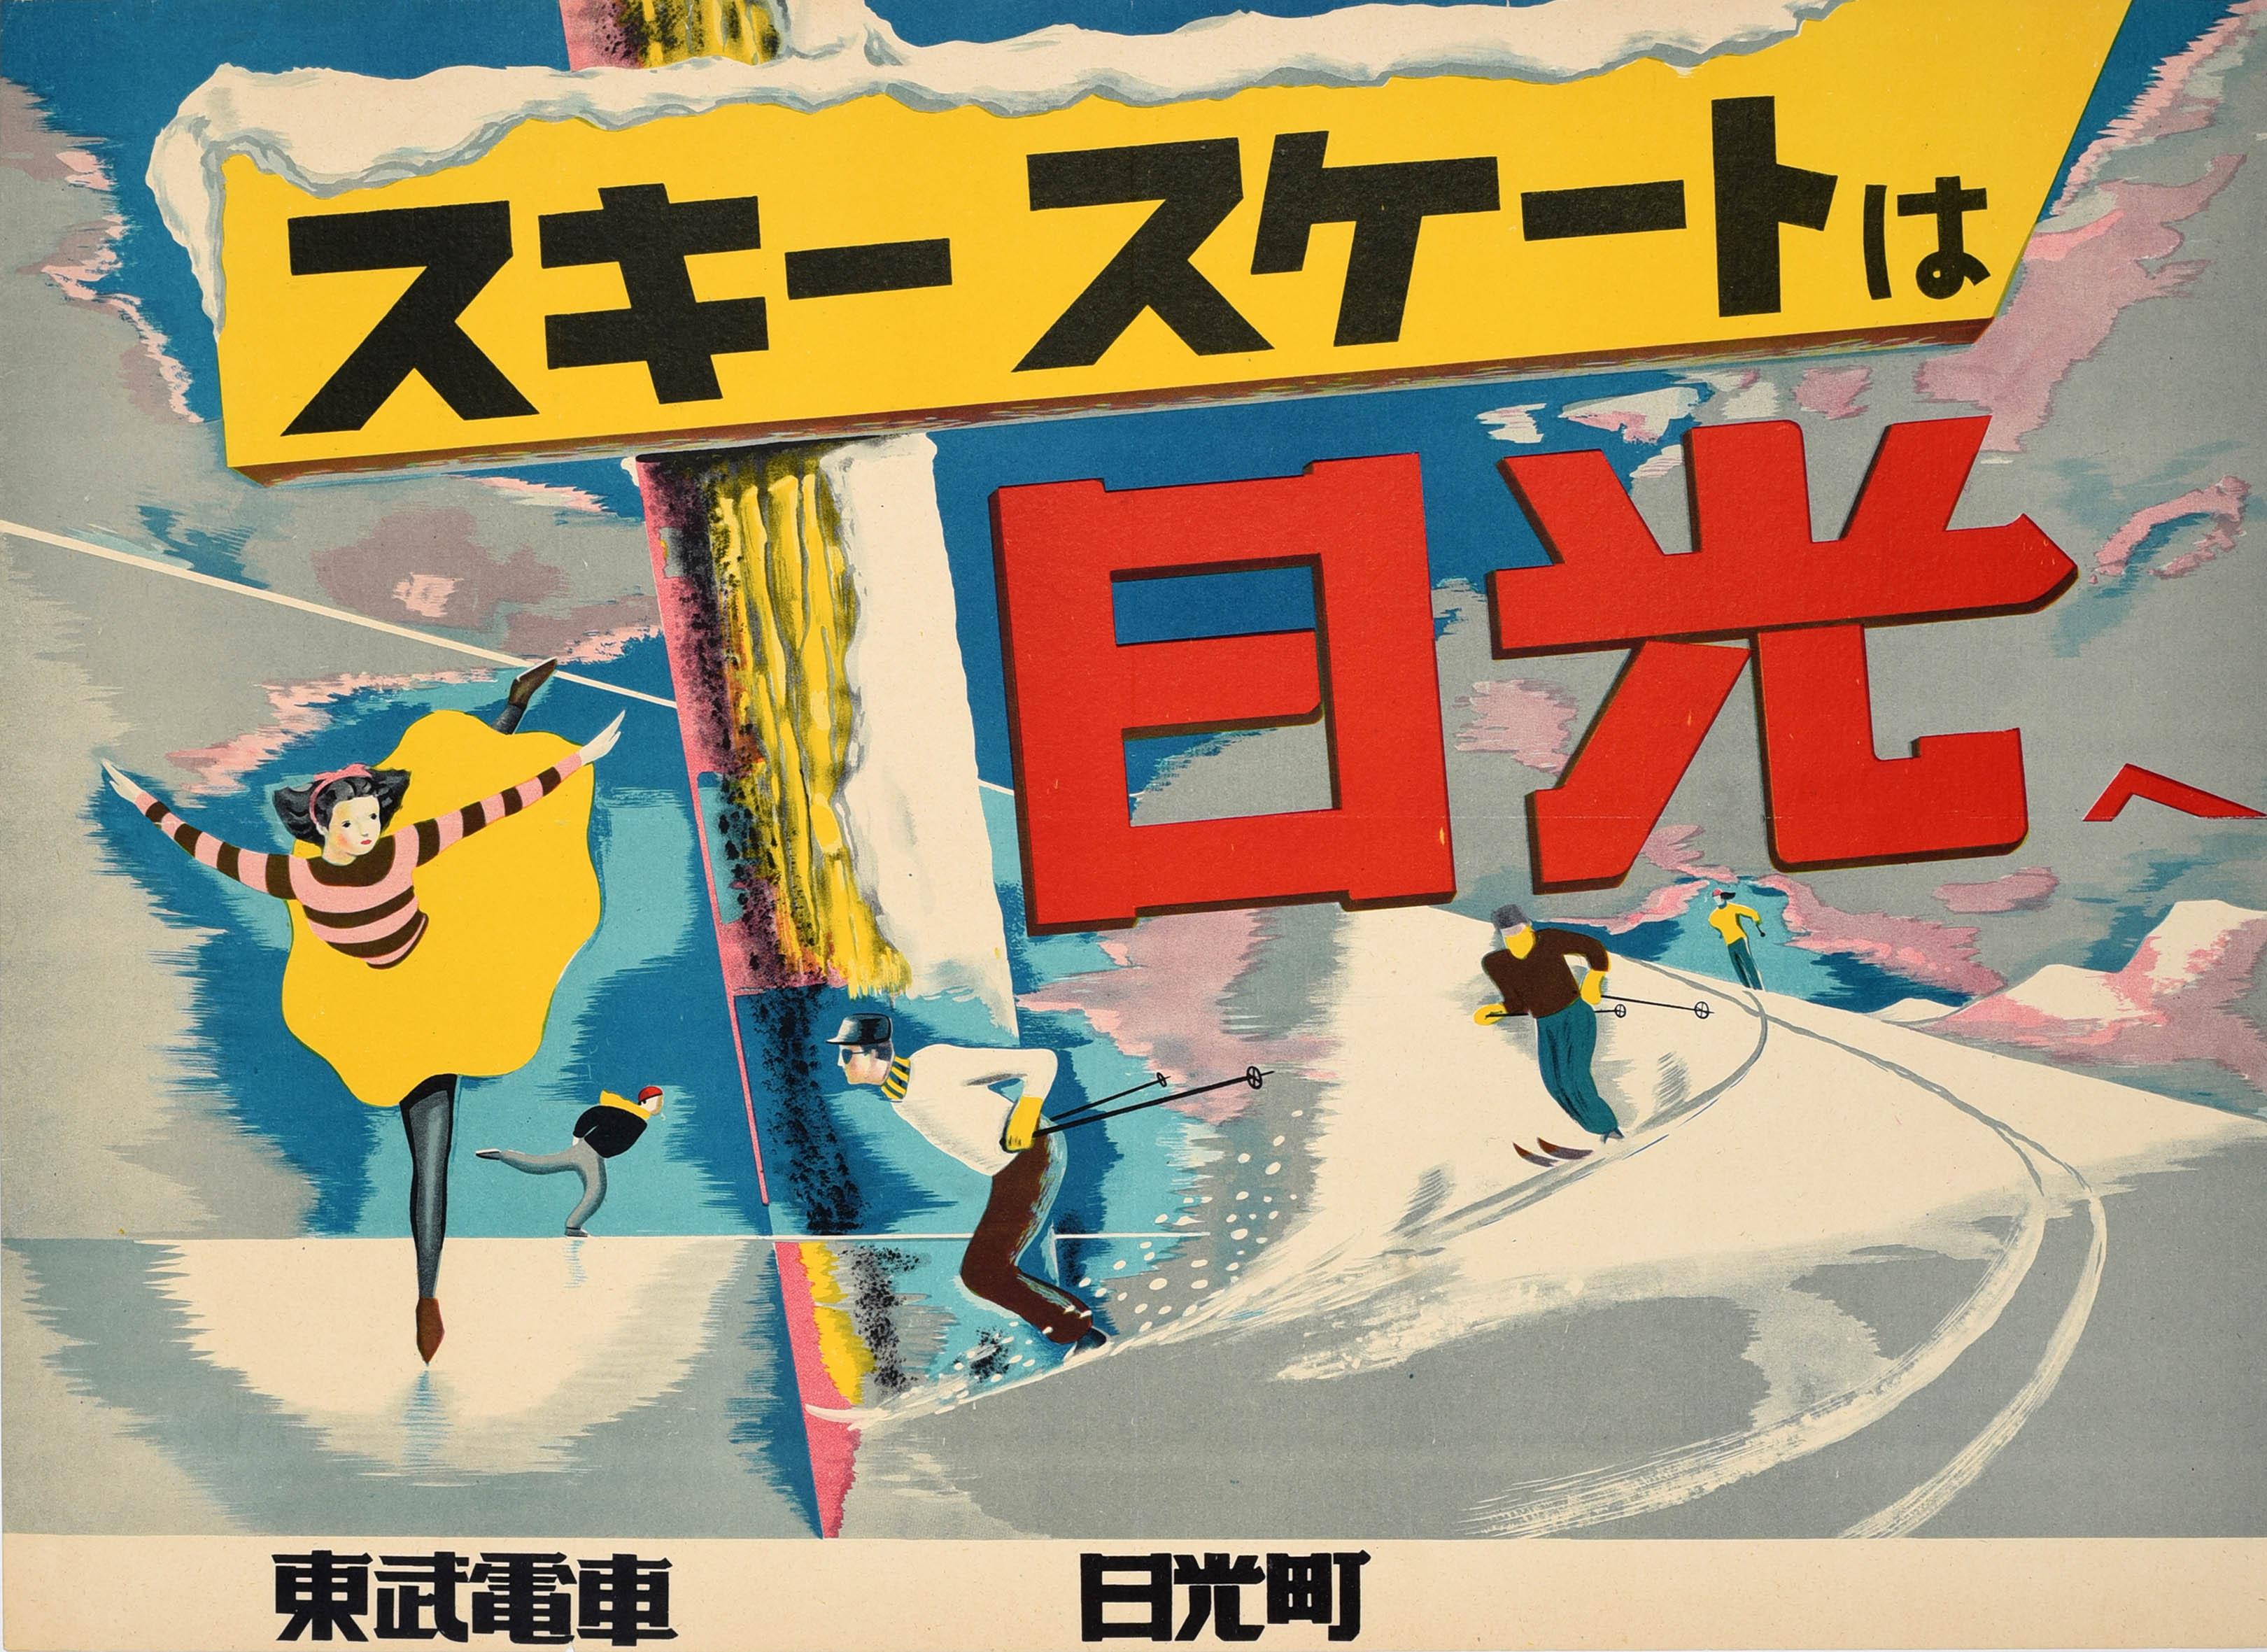 Unknown Print - Original Vintage Winter Sport Railway Travel Poster Japan Ski Skating Sunshine